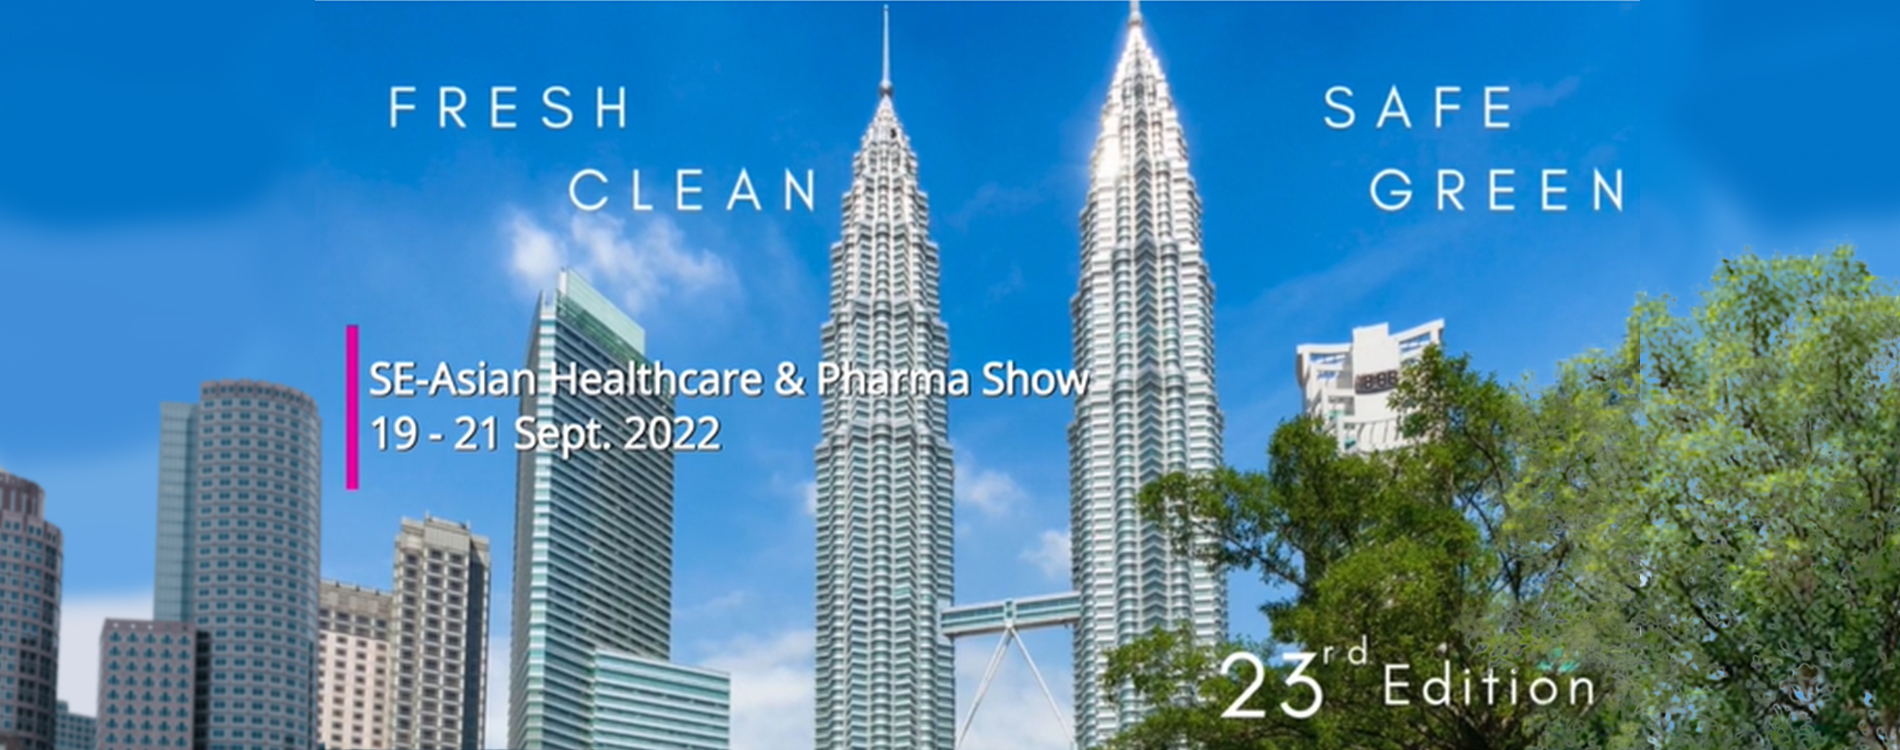 SE-Asian Healthcare & Pharma Show (19th - 21st Sept 2022)